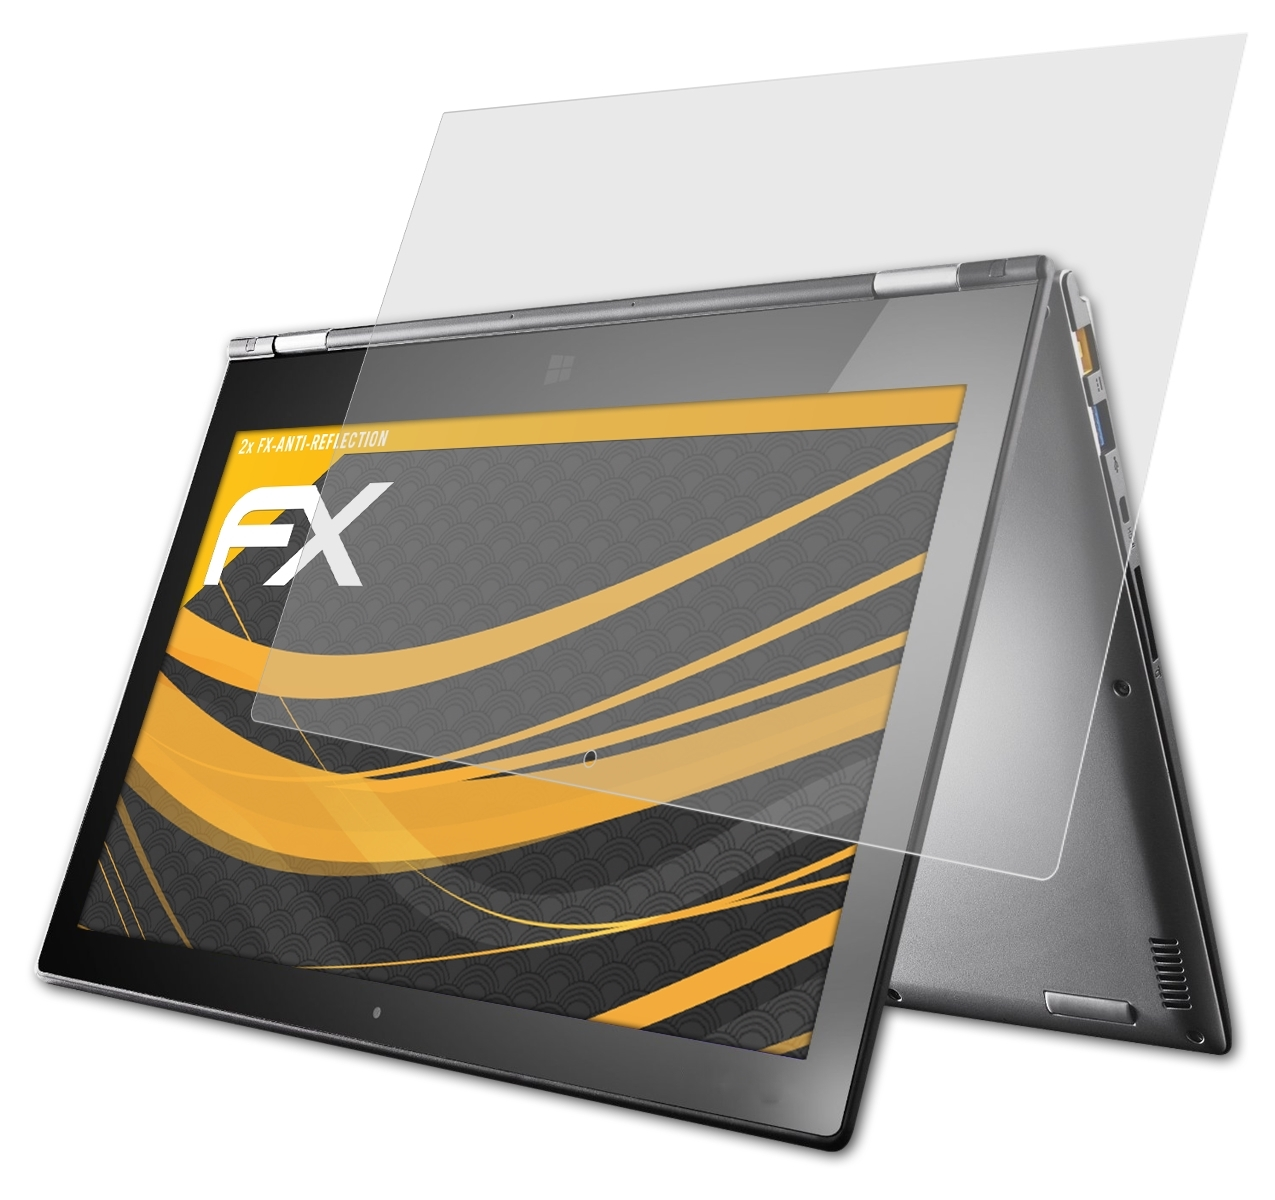 FX-Antireflex 2x Displayschutz(für ATFOLIX Pro Lenovo inch)) 2 Yoga (13.3 IdeaPad